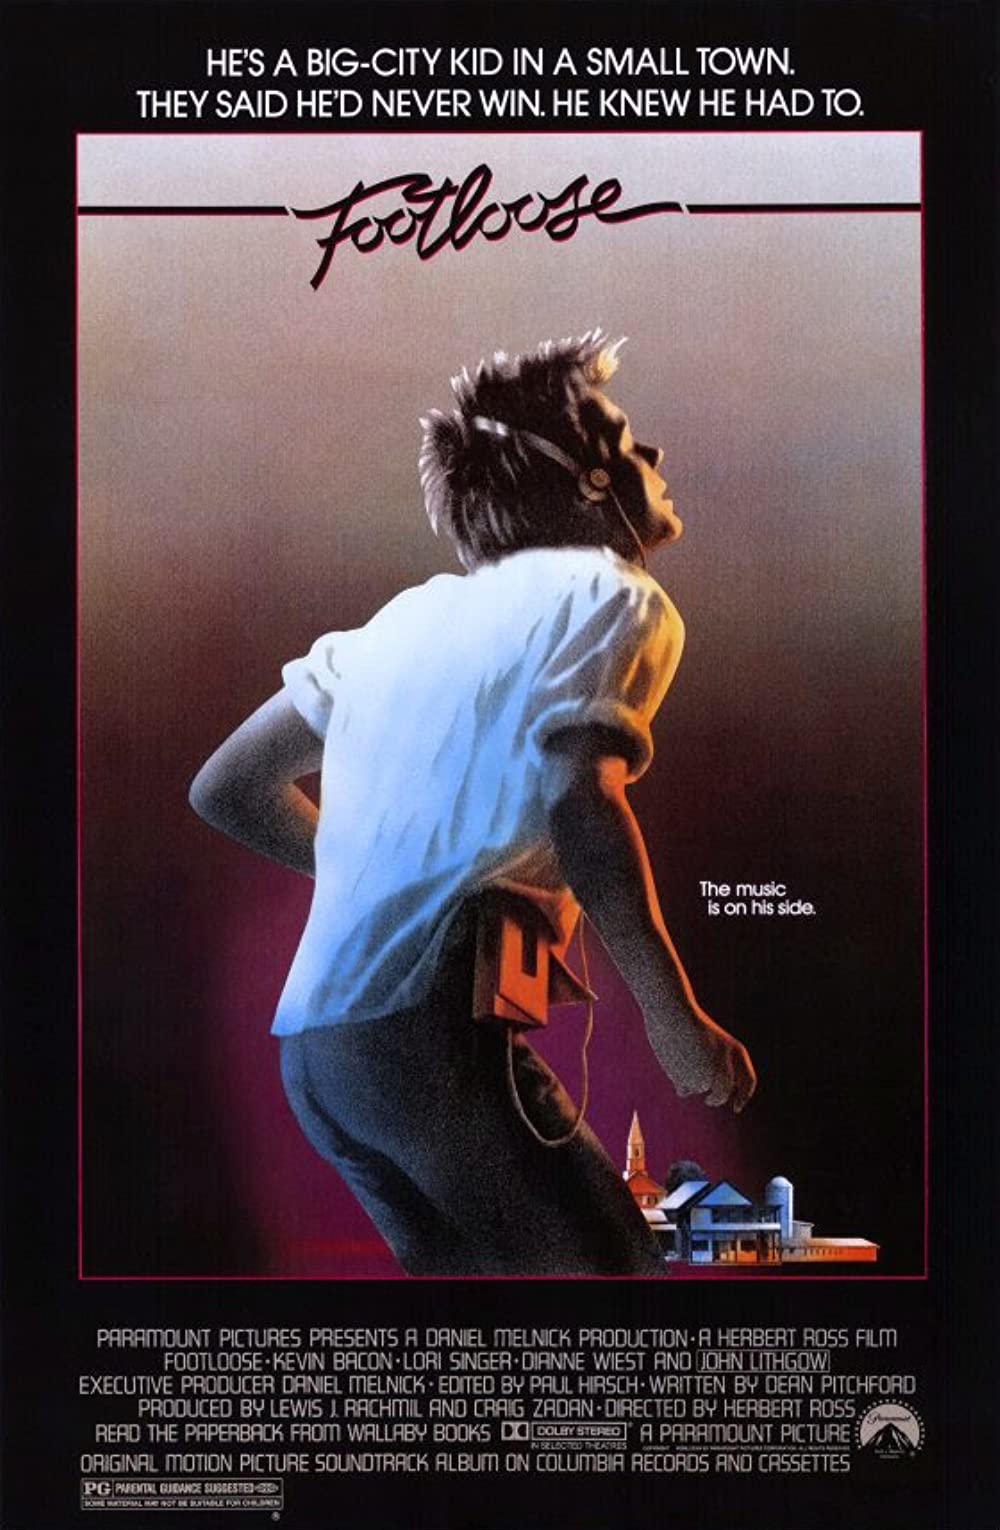 Filmbeschreibung zu Footloose (1984)